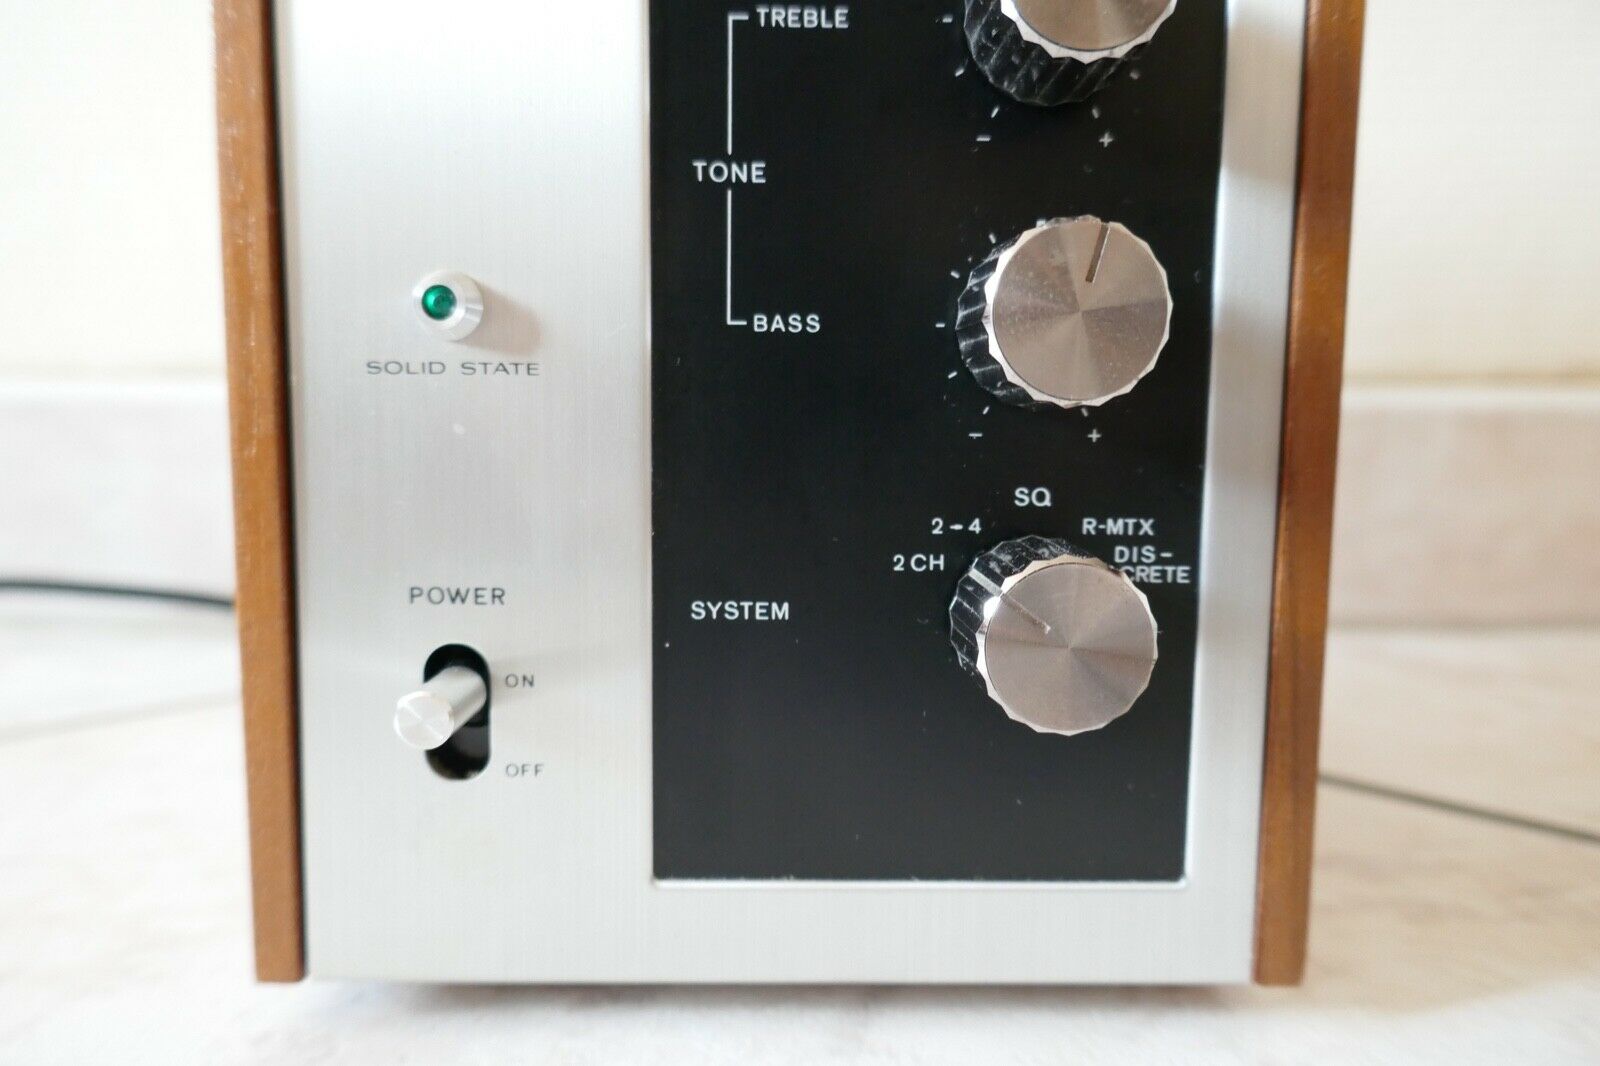 amplifier amplificateur sony sq decoder / amplifier 100 vintage occasion